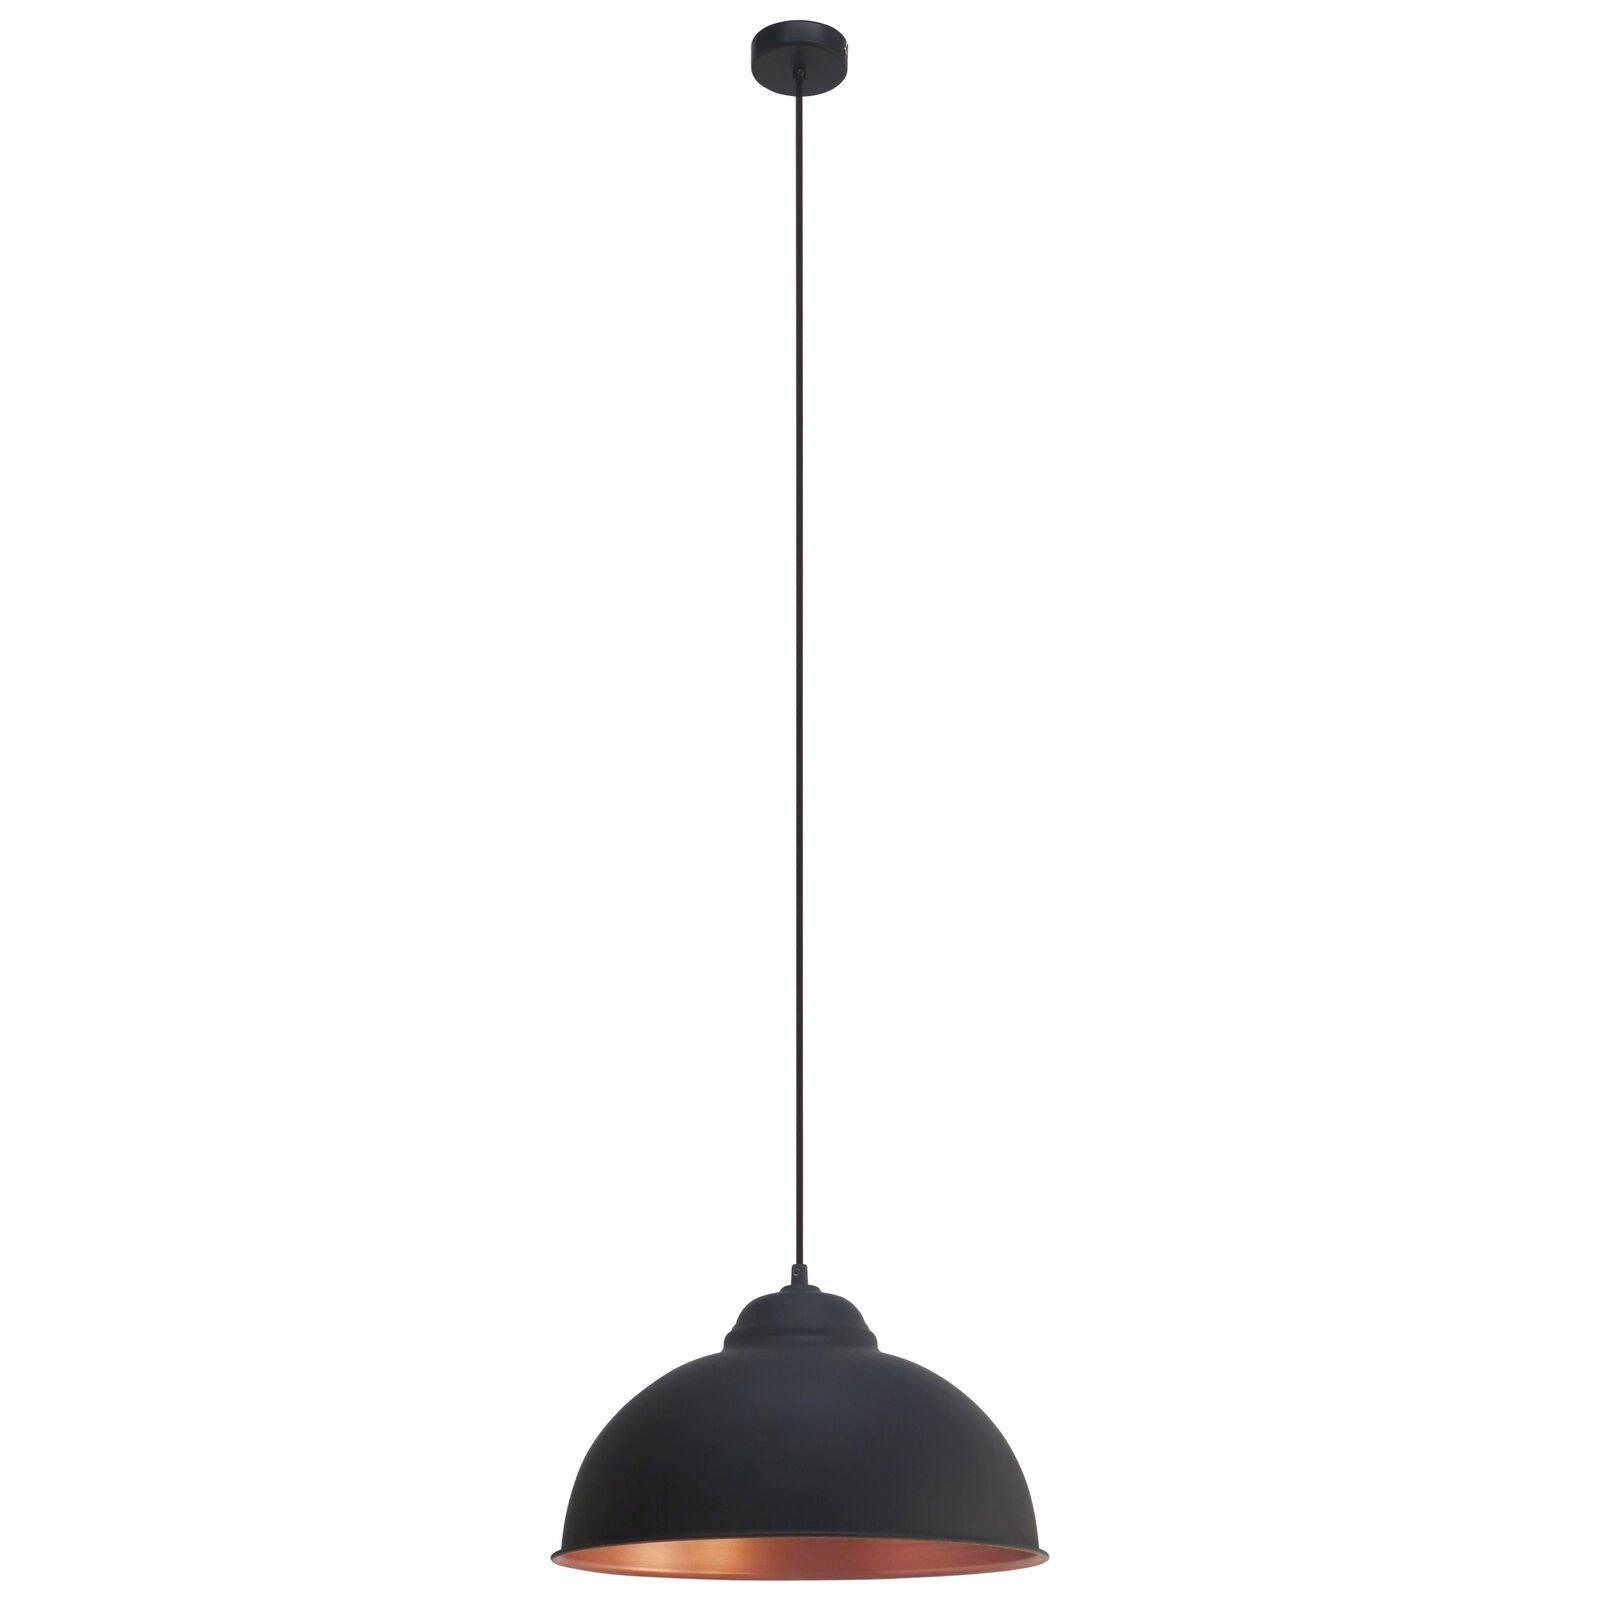 Hanging Ceiling Pendant Light Black & Copper Dome Bowl Shade 1 x 60W E27 Bulb